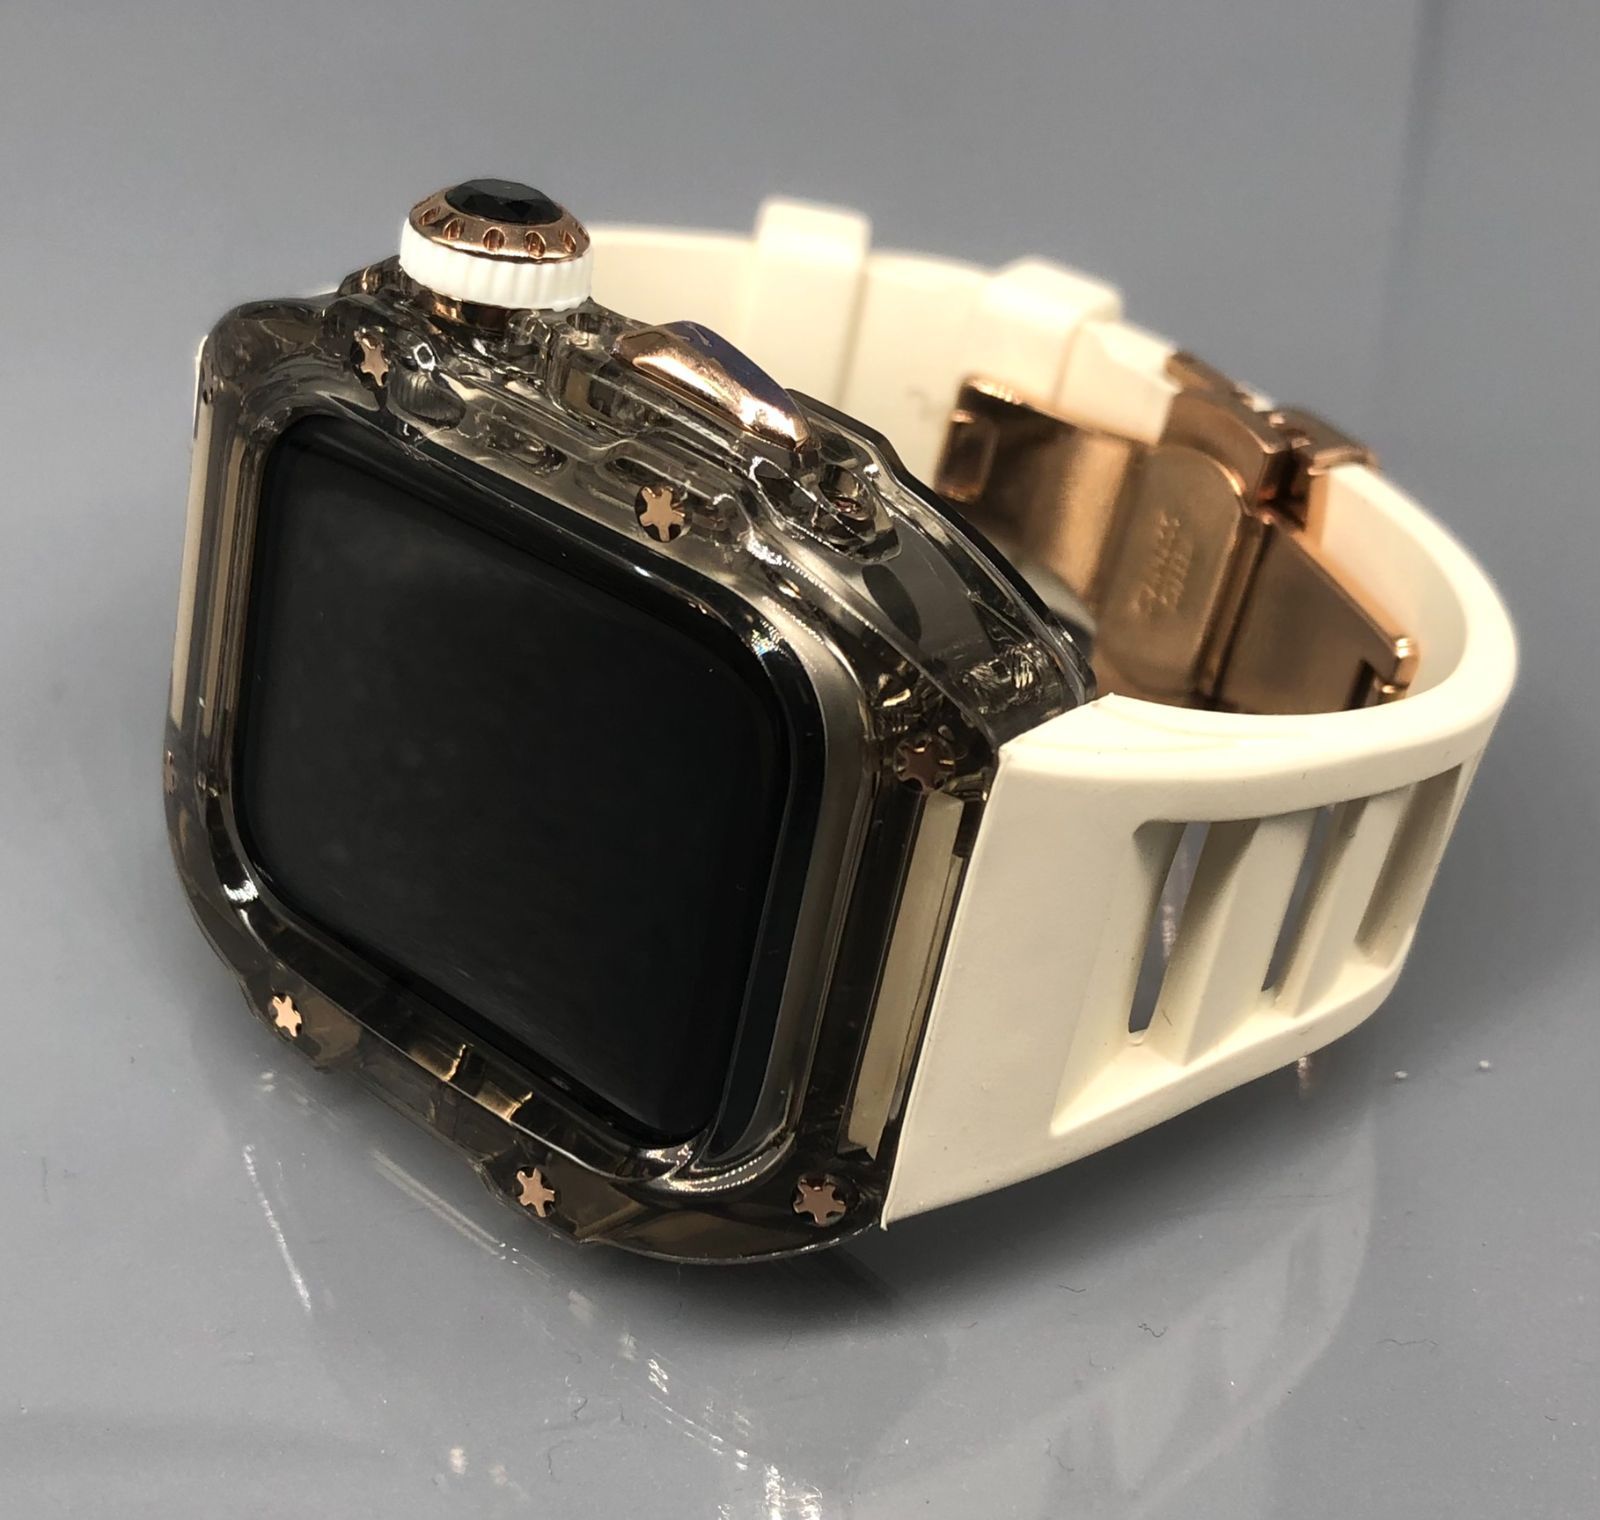 Apple Watch SE 40mm ケース カバー m0a